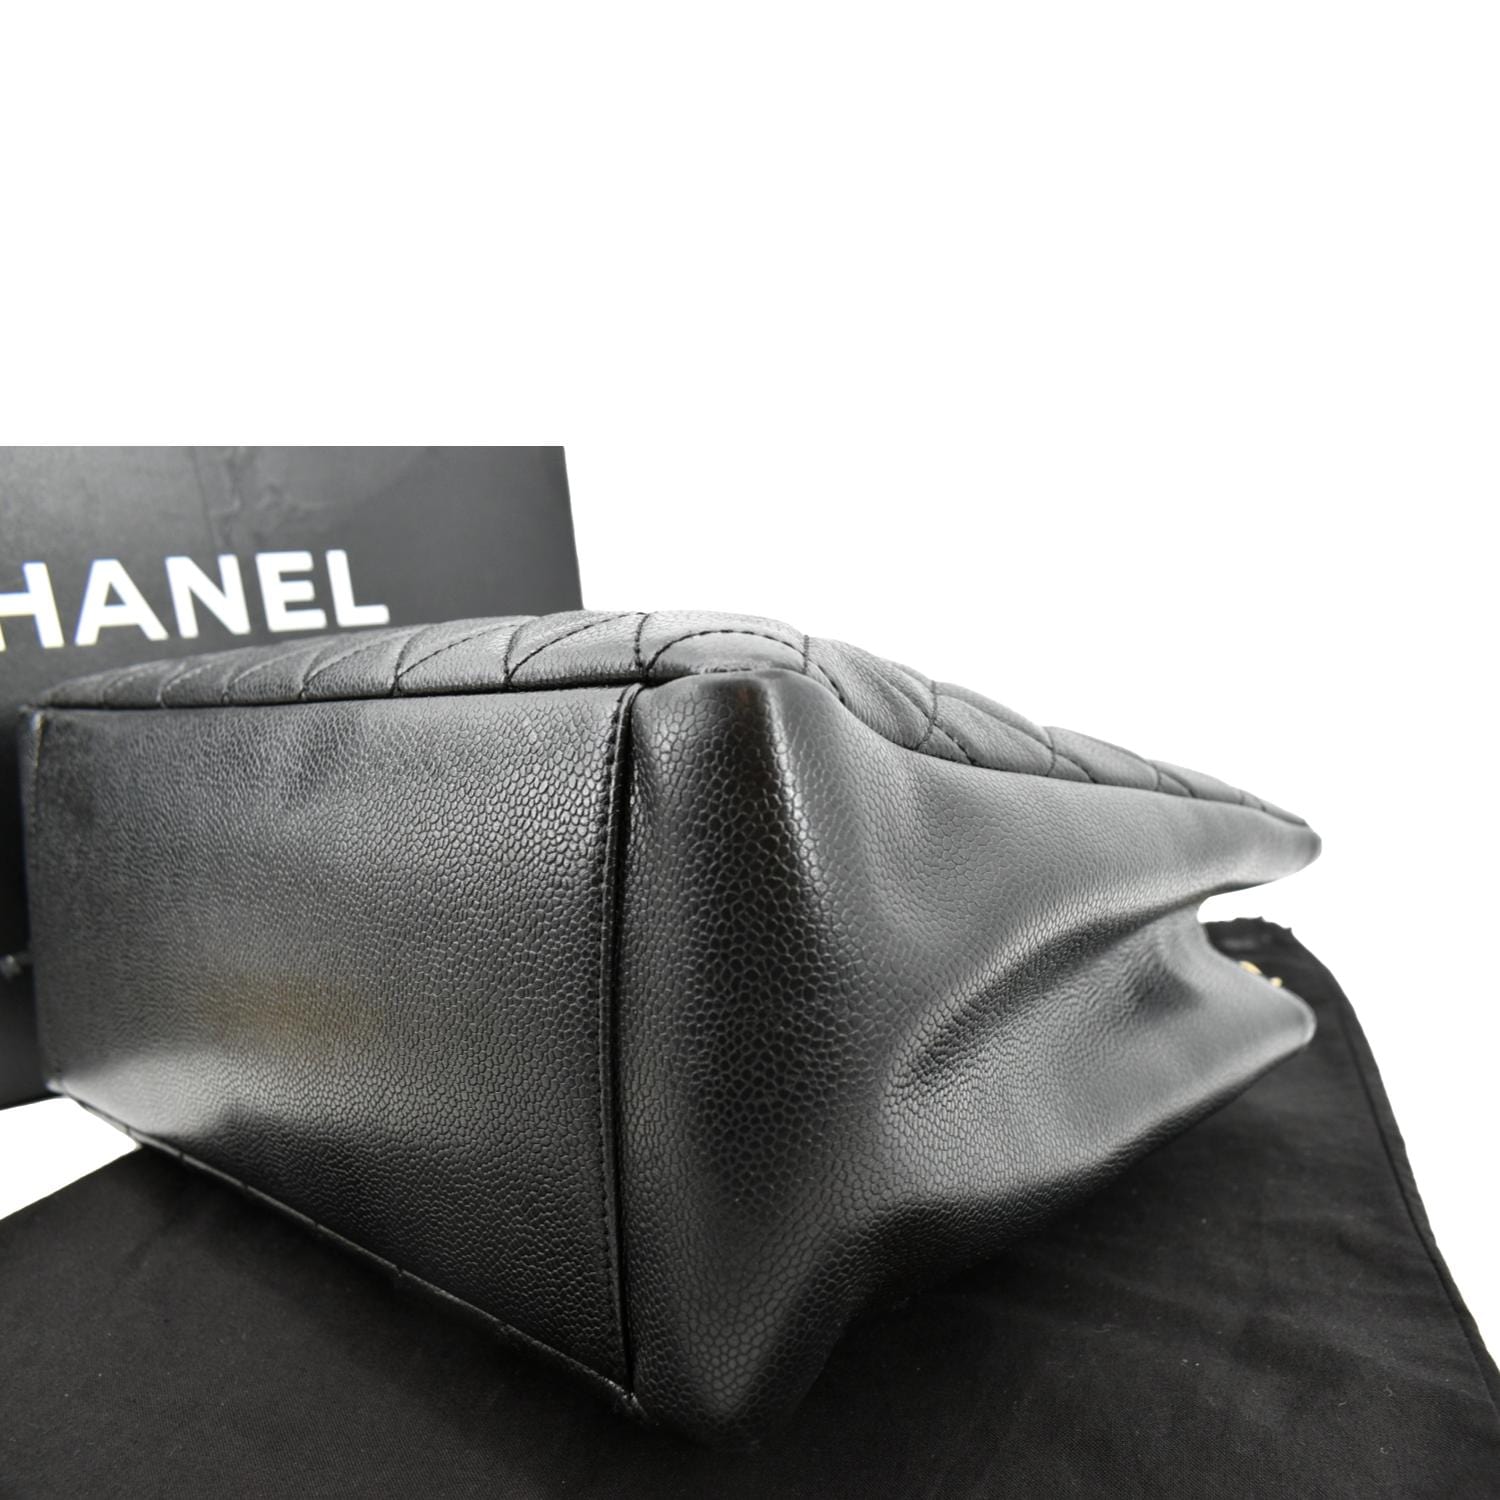 Chanel Handbag Repair